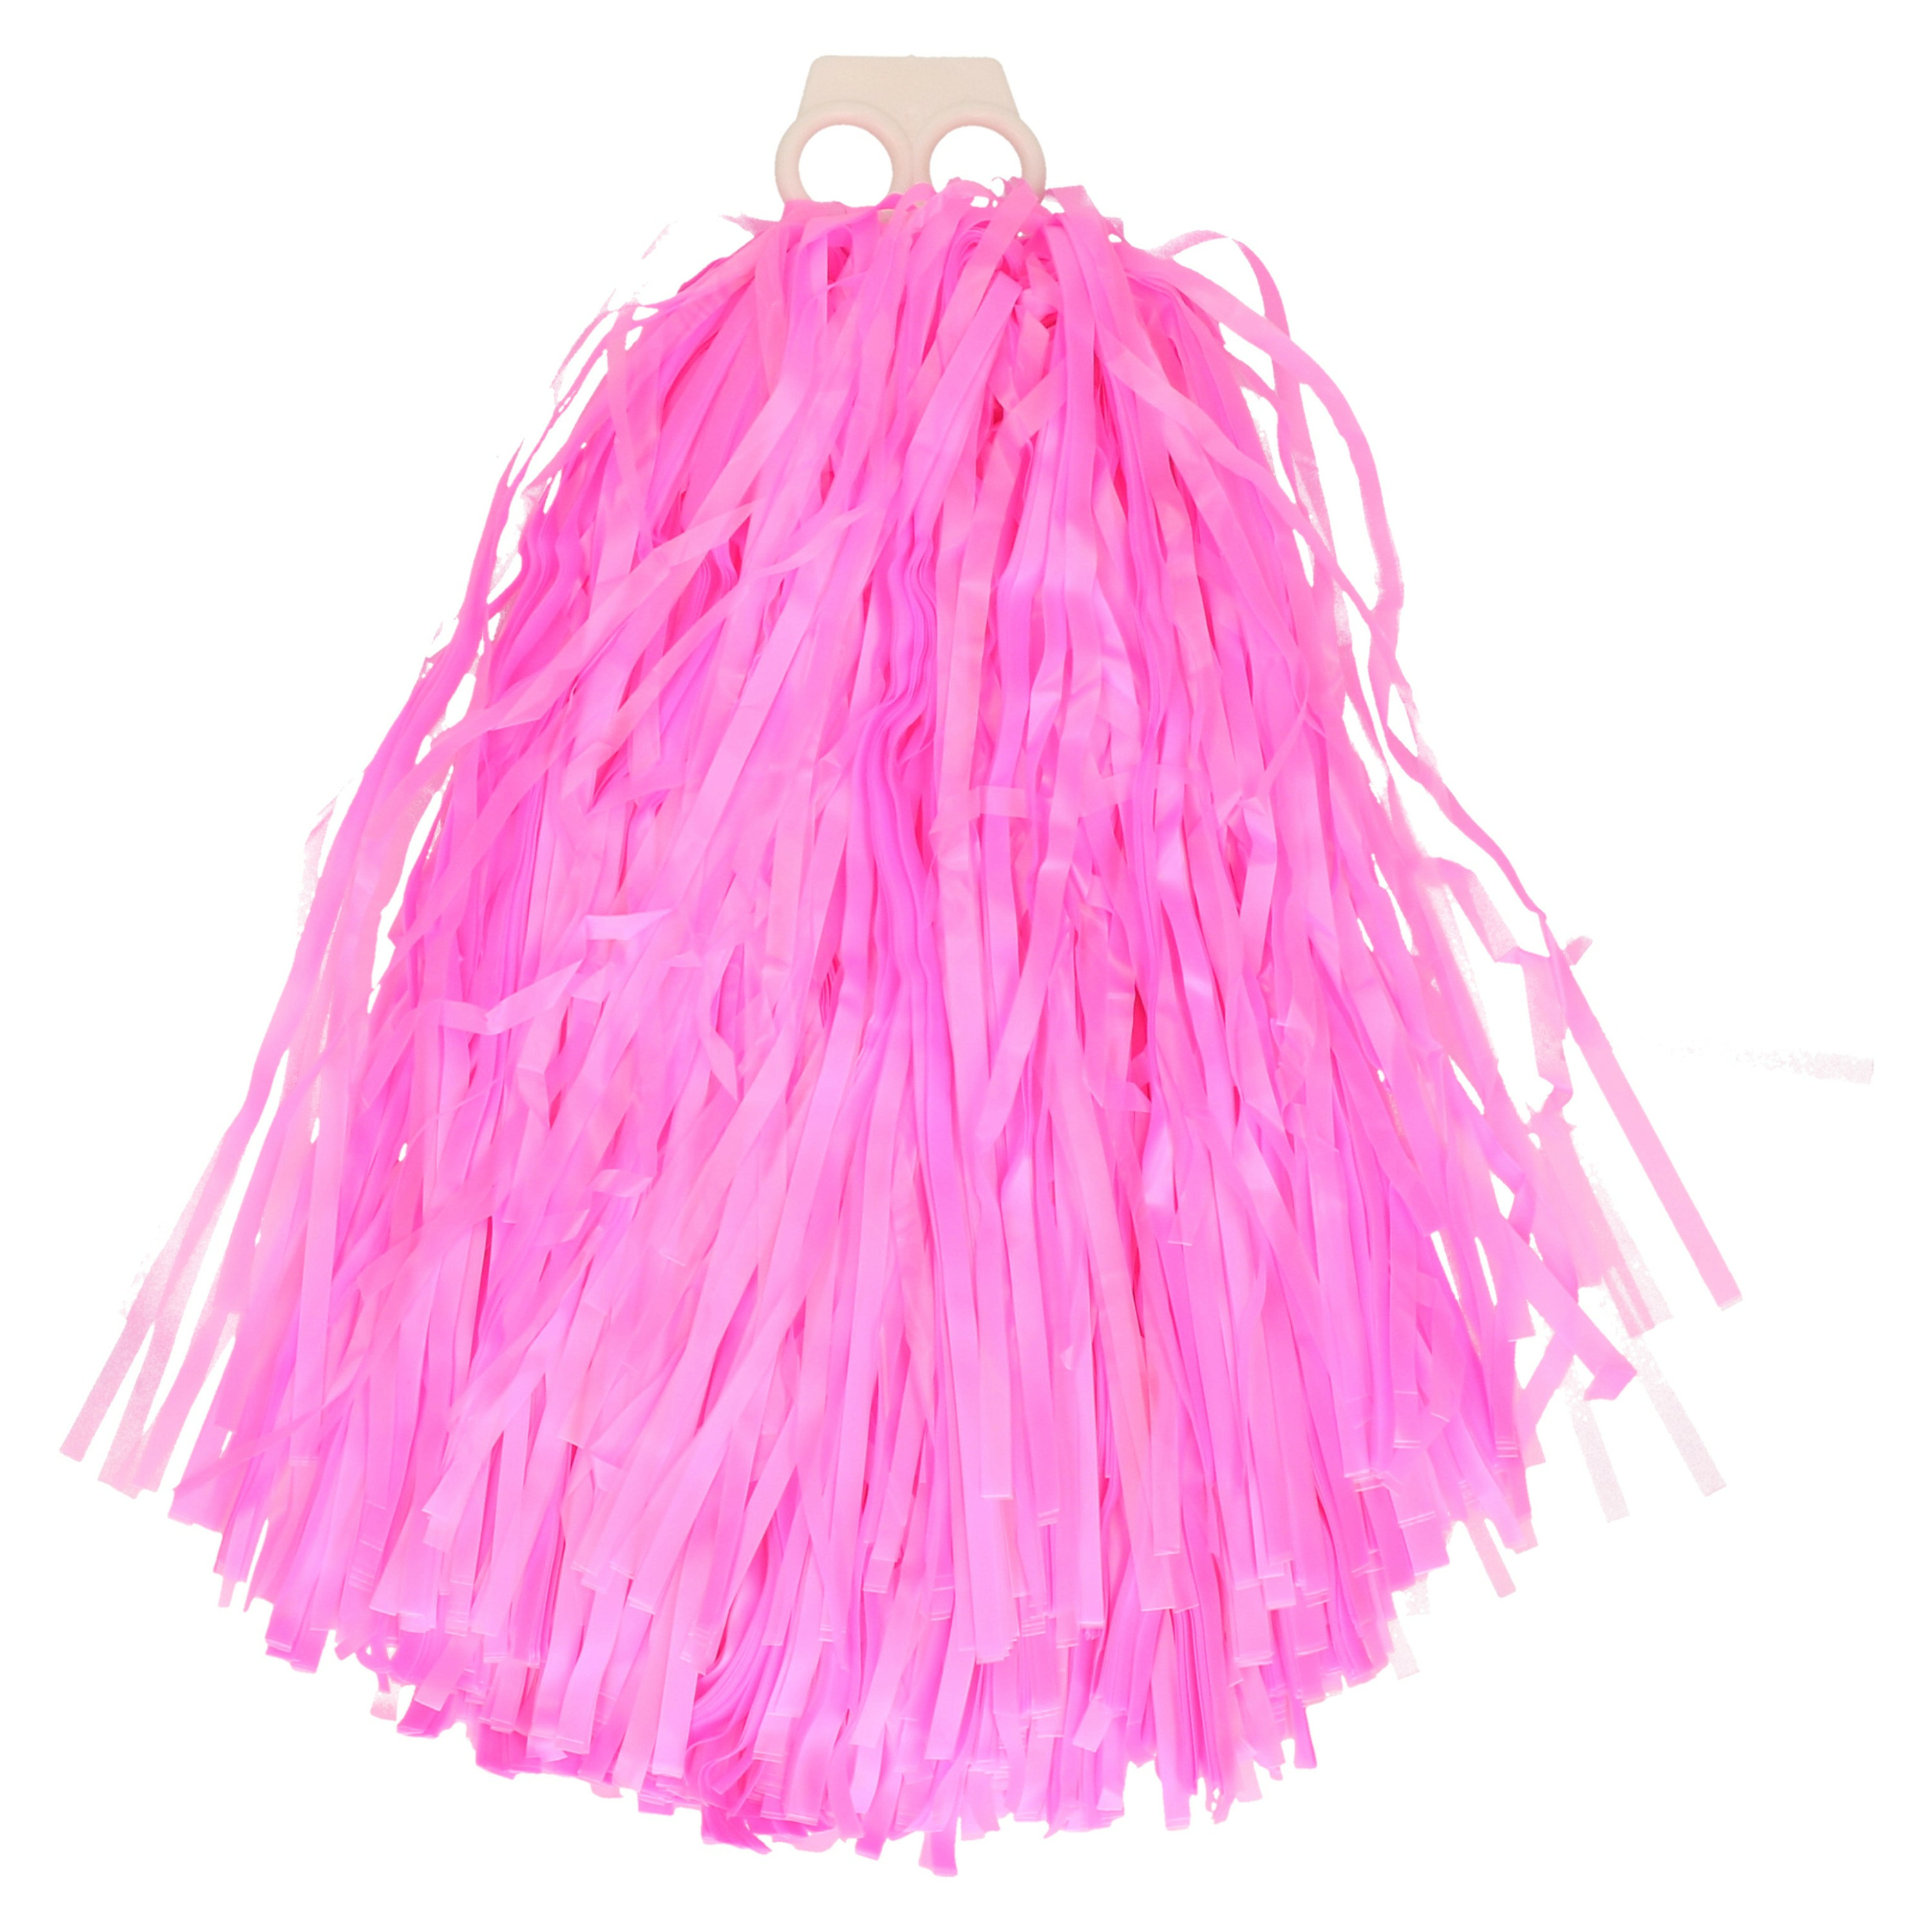 Cheerballs-pompoms 1x roze met franjes en ring handgreep 28 cm